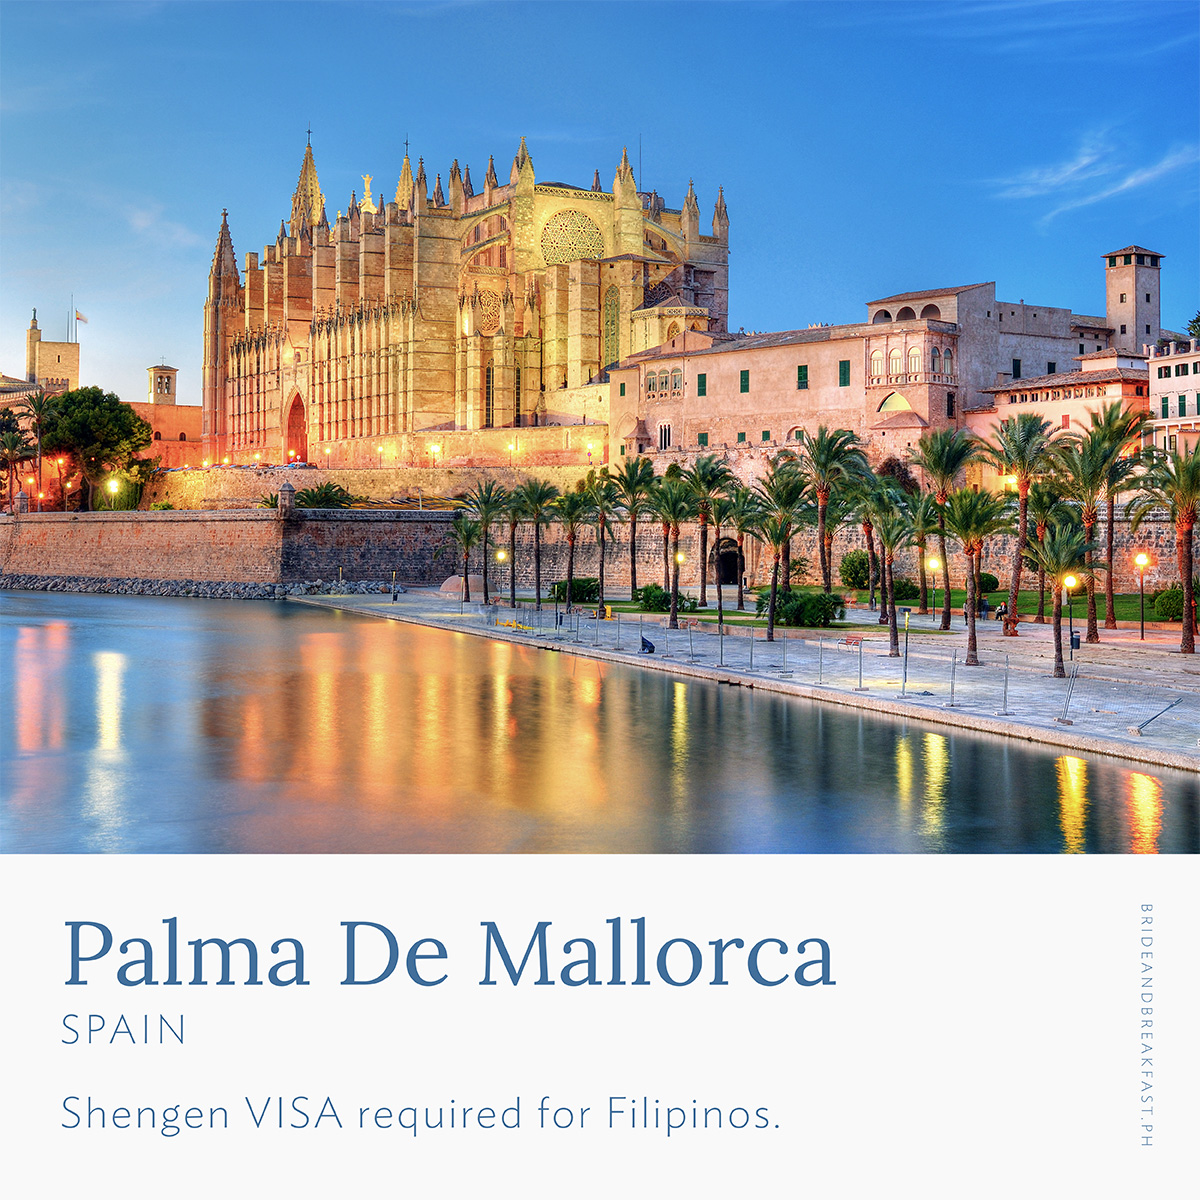 PALMA DE MALLORCA, SPAIN Visa Requirement: Shengen Visa required for Filipinos.